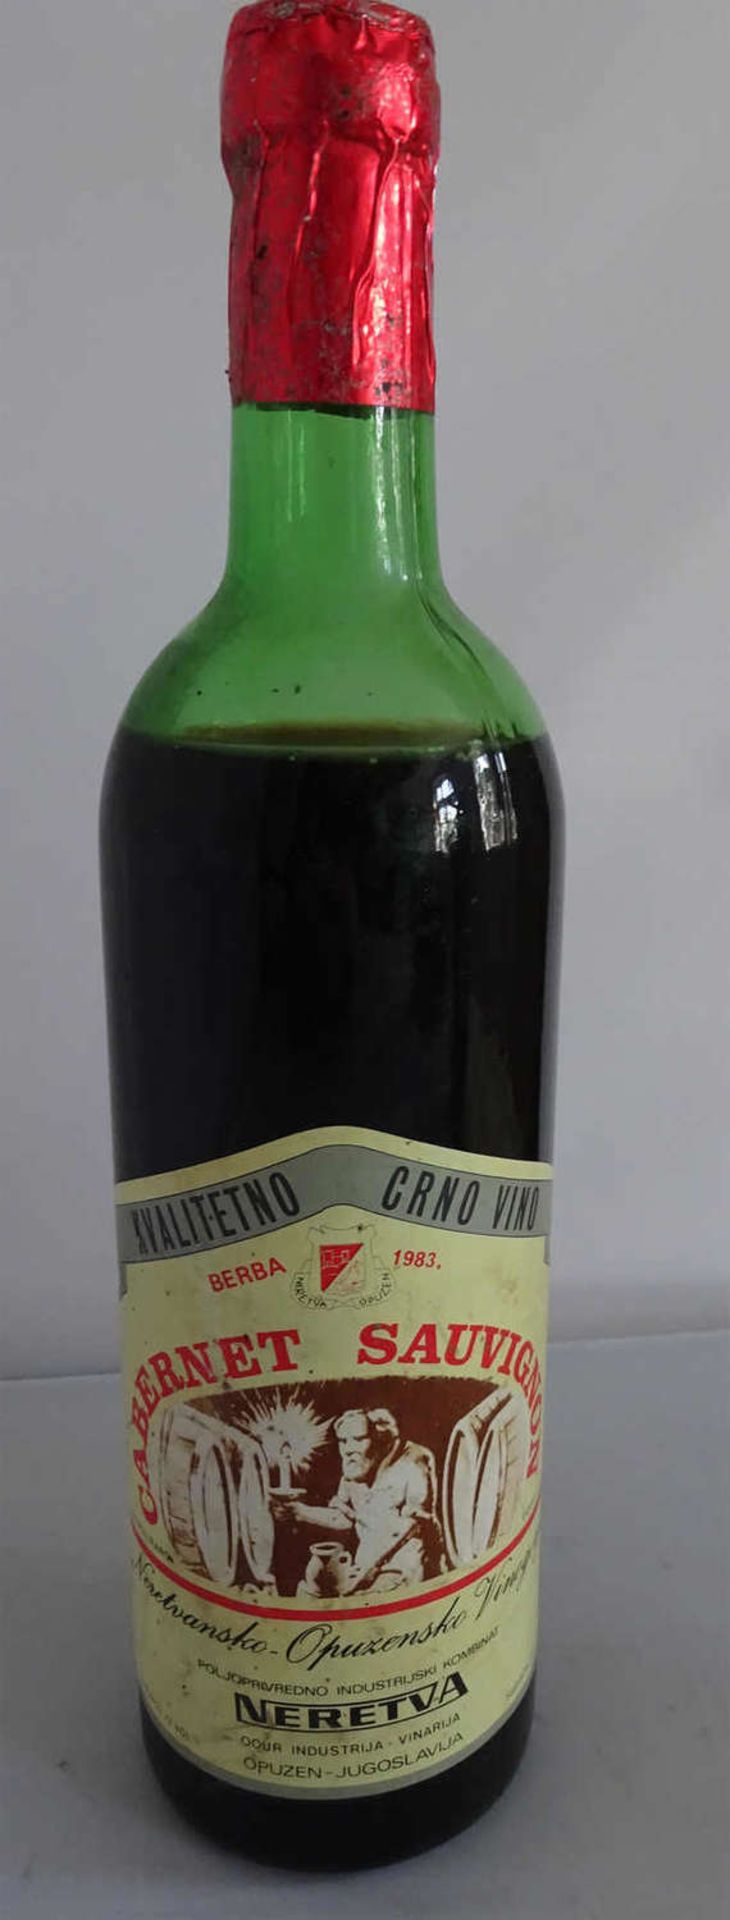 Rotwein, Neretva, Cabernet Sauvignon, Jugoslawien 1983Red wine, Neretva, Cabernet Sauvignon,